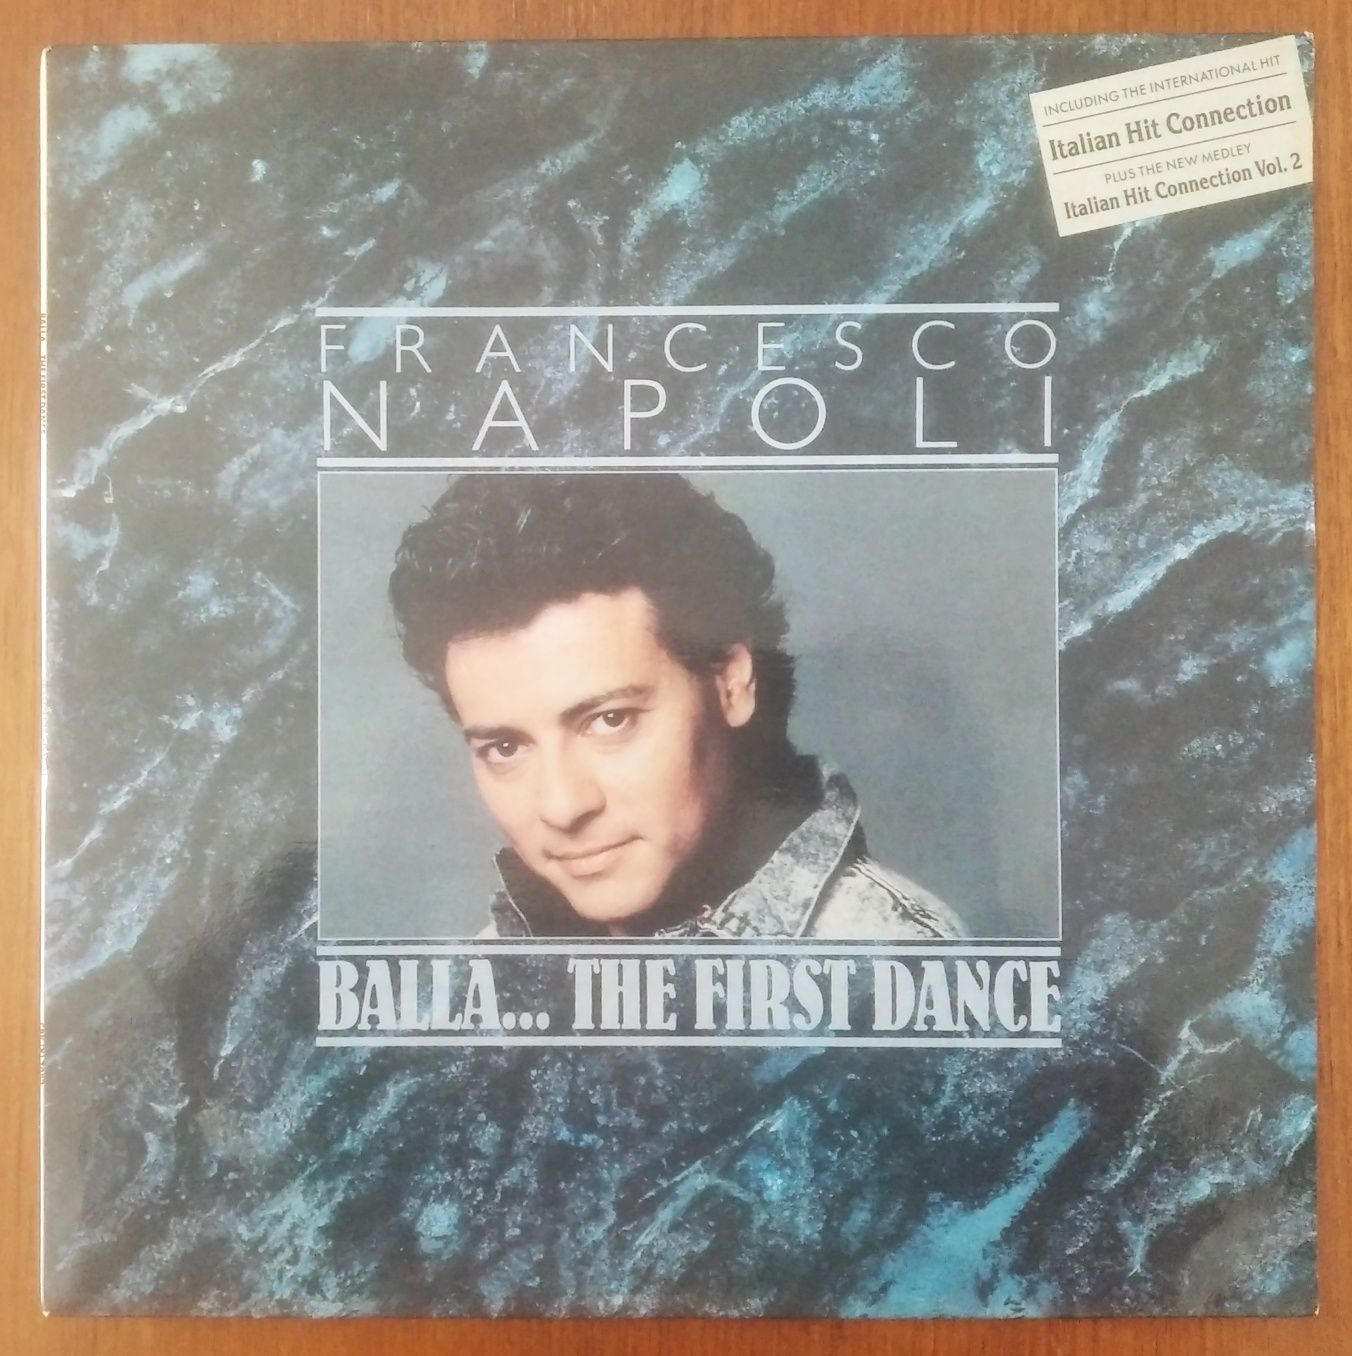 Francesco Napoli disco de vinil "Balla...The First Dance".